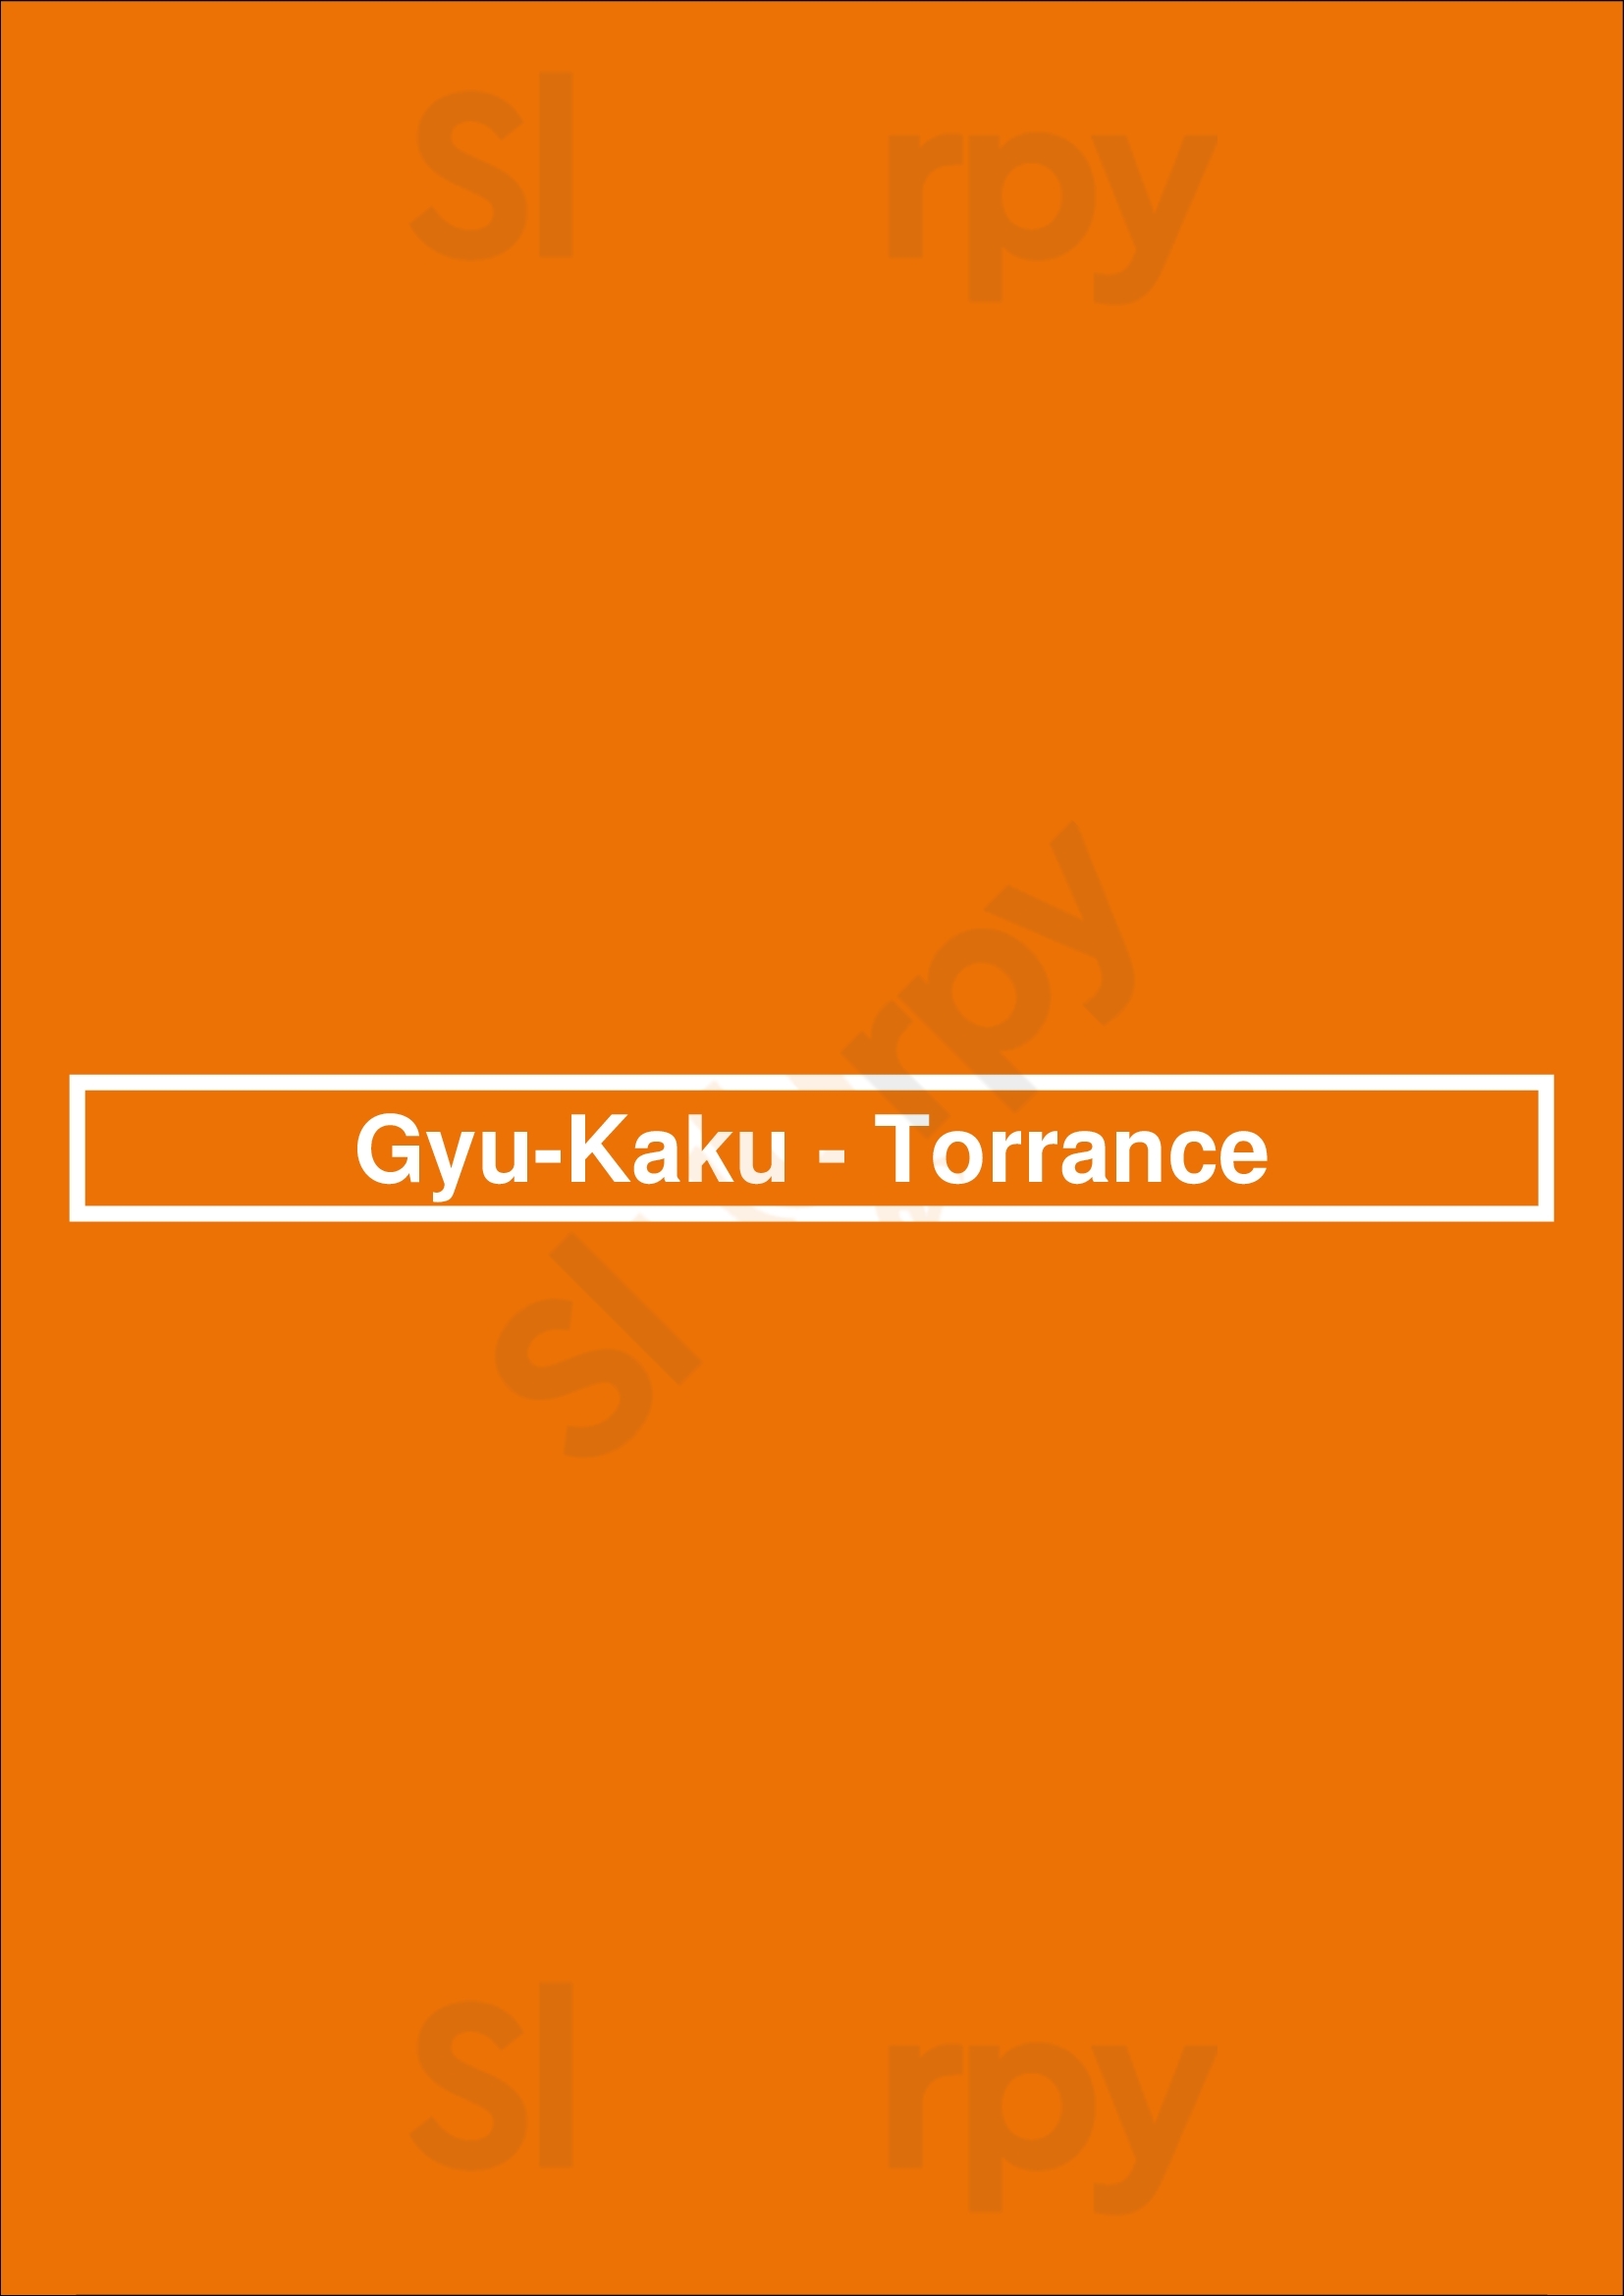 Gyu-kaku Japanese Bbq Torrance Menu - 1